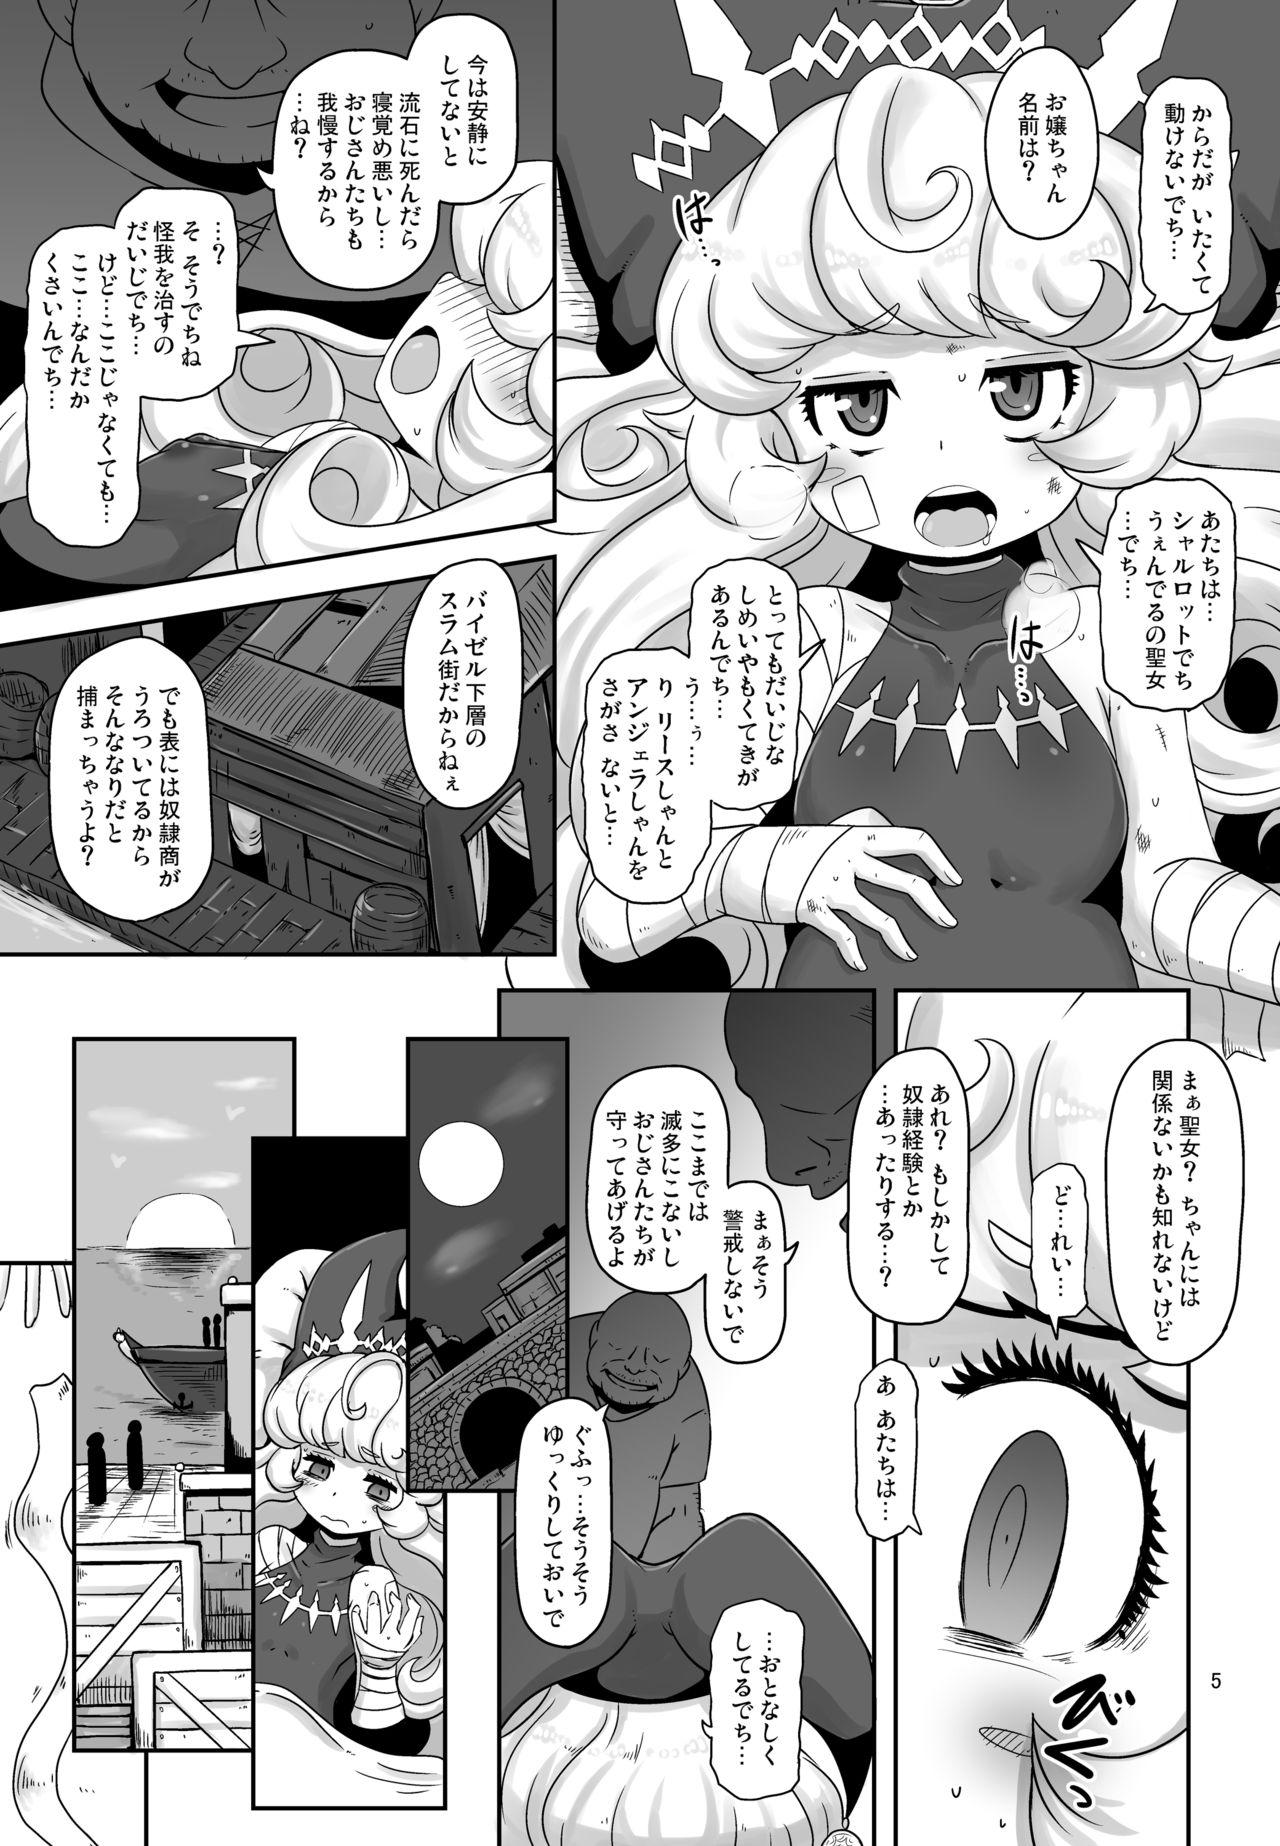 Solo Girl Mamapotepote PonPon - Seiken densetsu 3 Large - Page 5